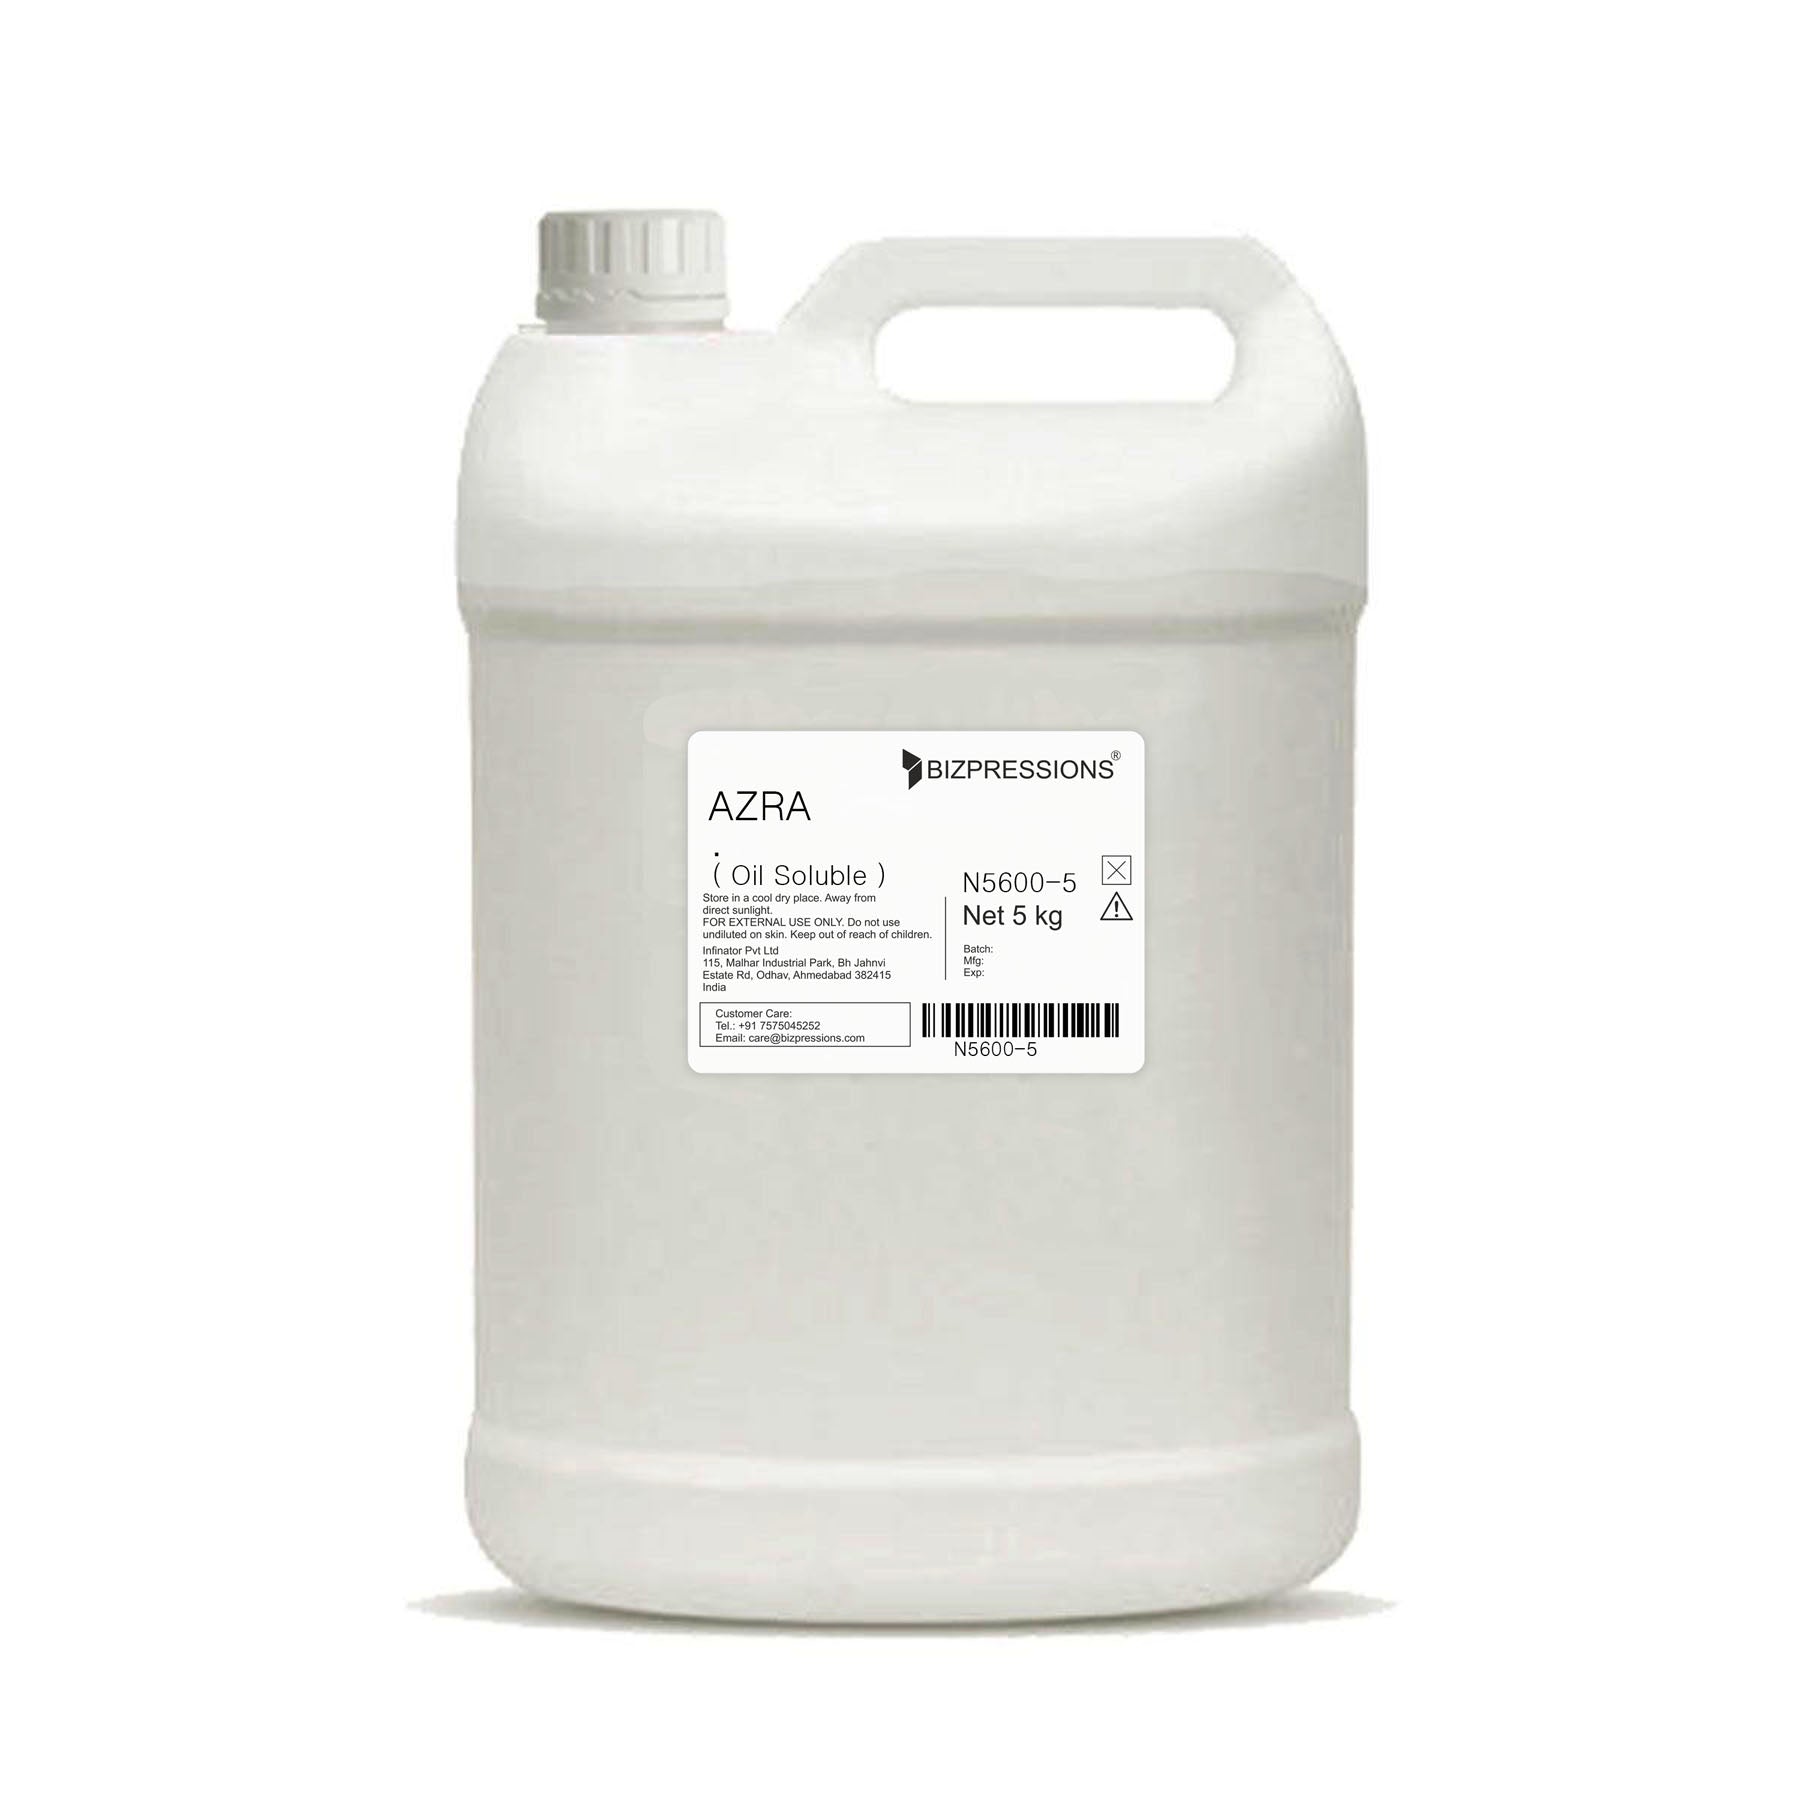 AZRA - Fragrance ( Oil Soluble ) - 5 kg